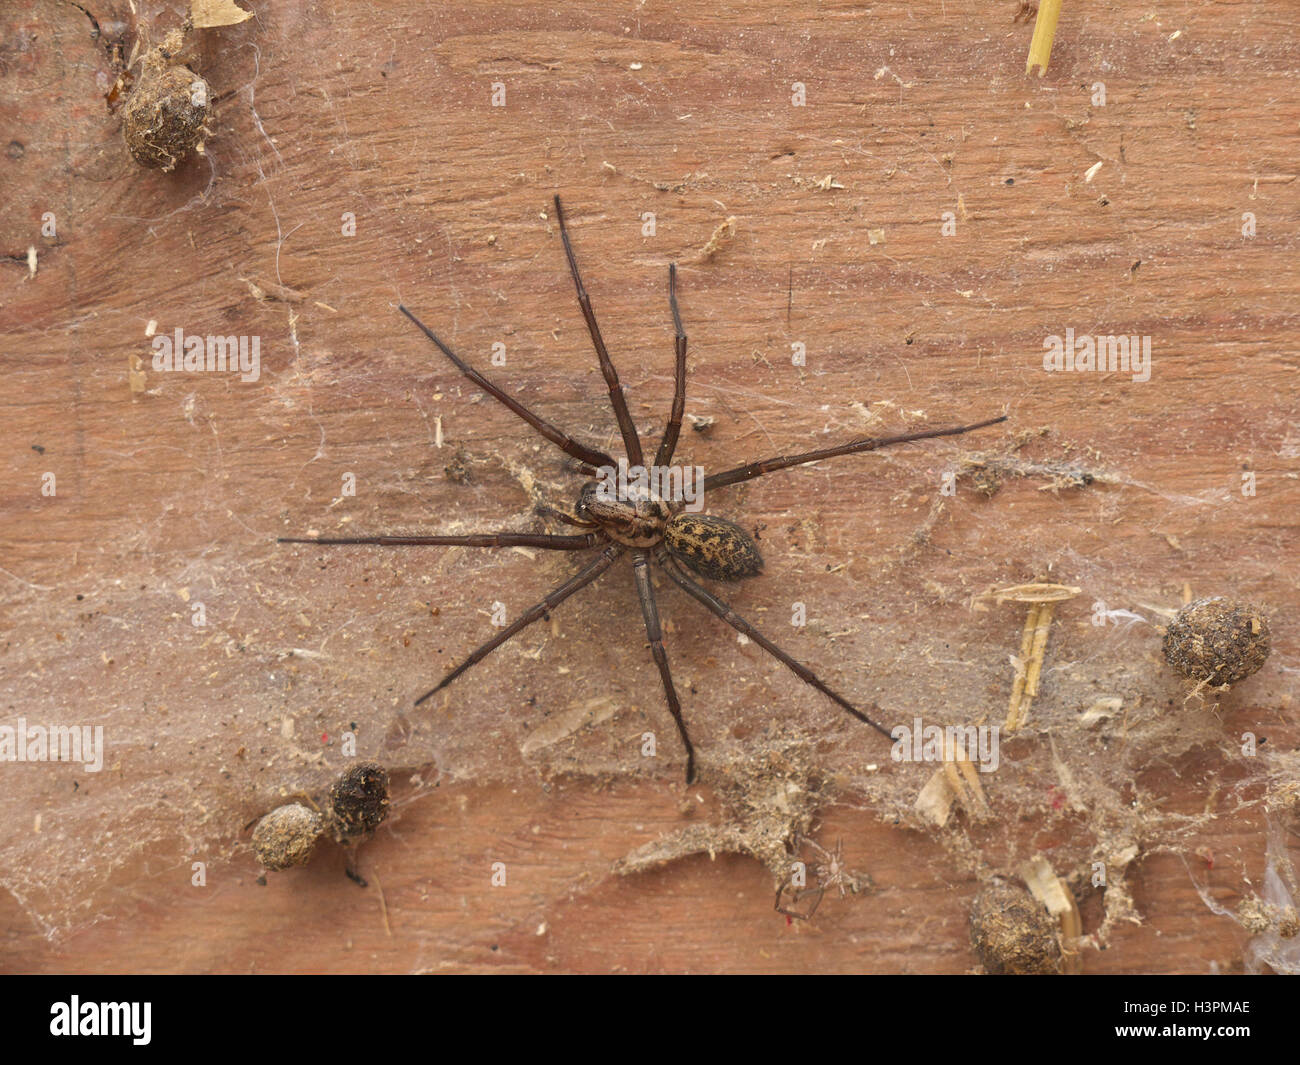 Common House Spider (Eratigena Atrica formally Tegenaria gigantea ) Stock Photo